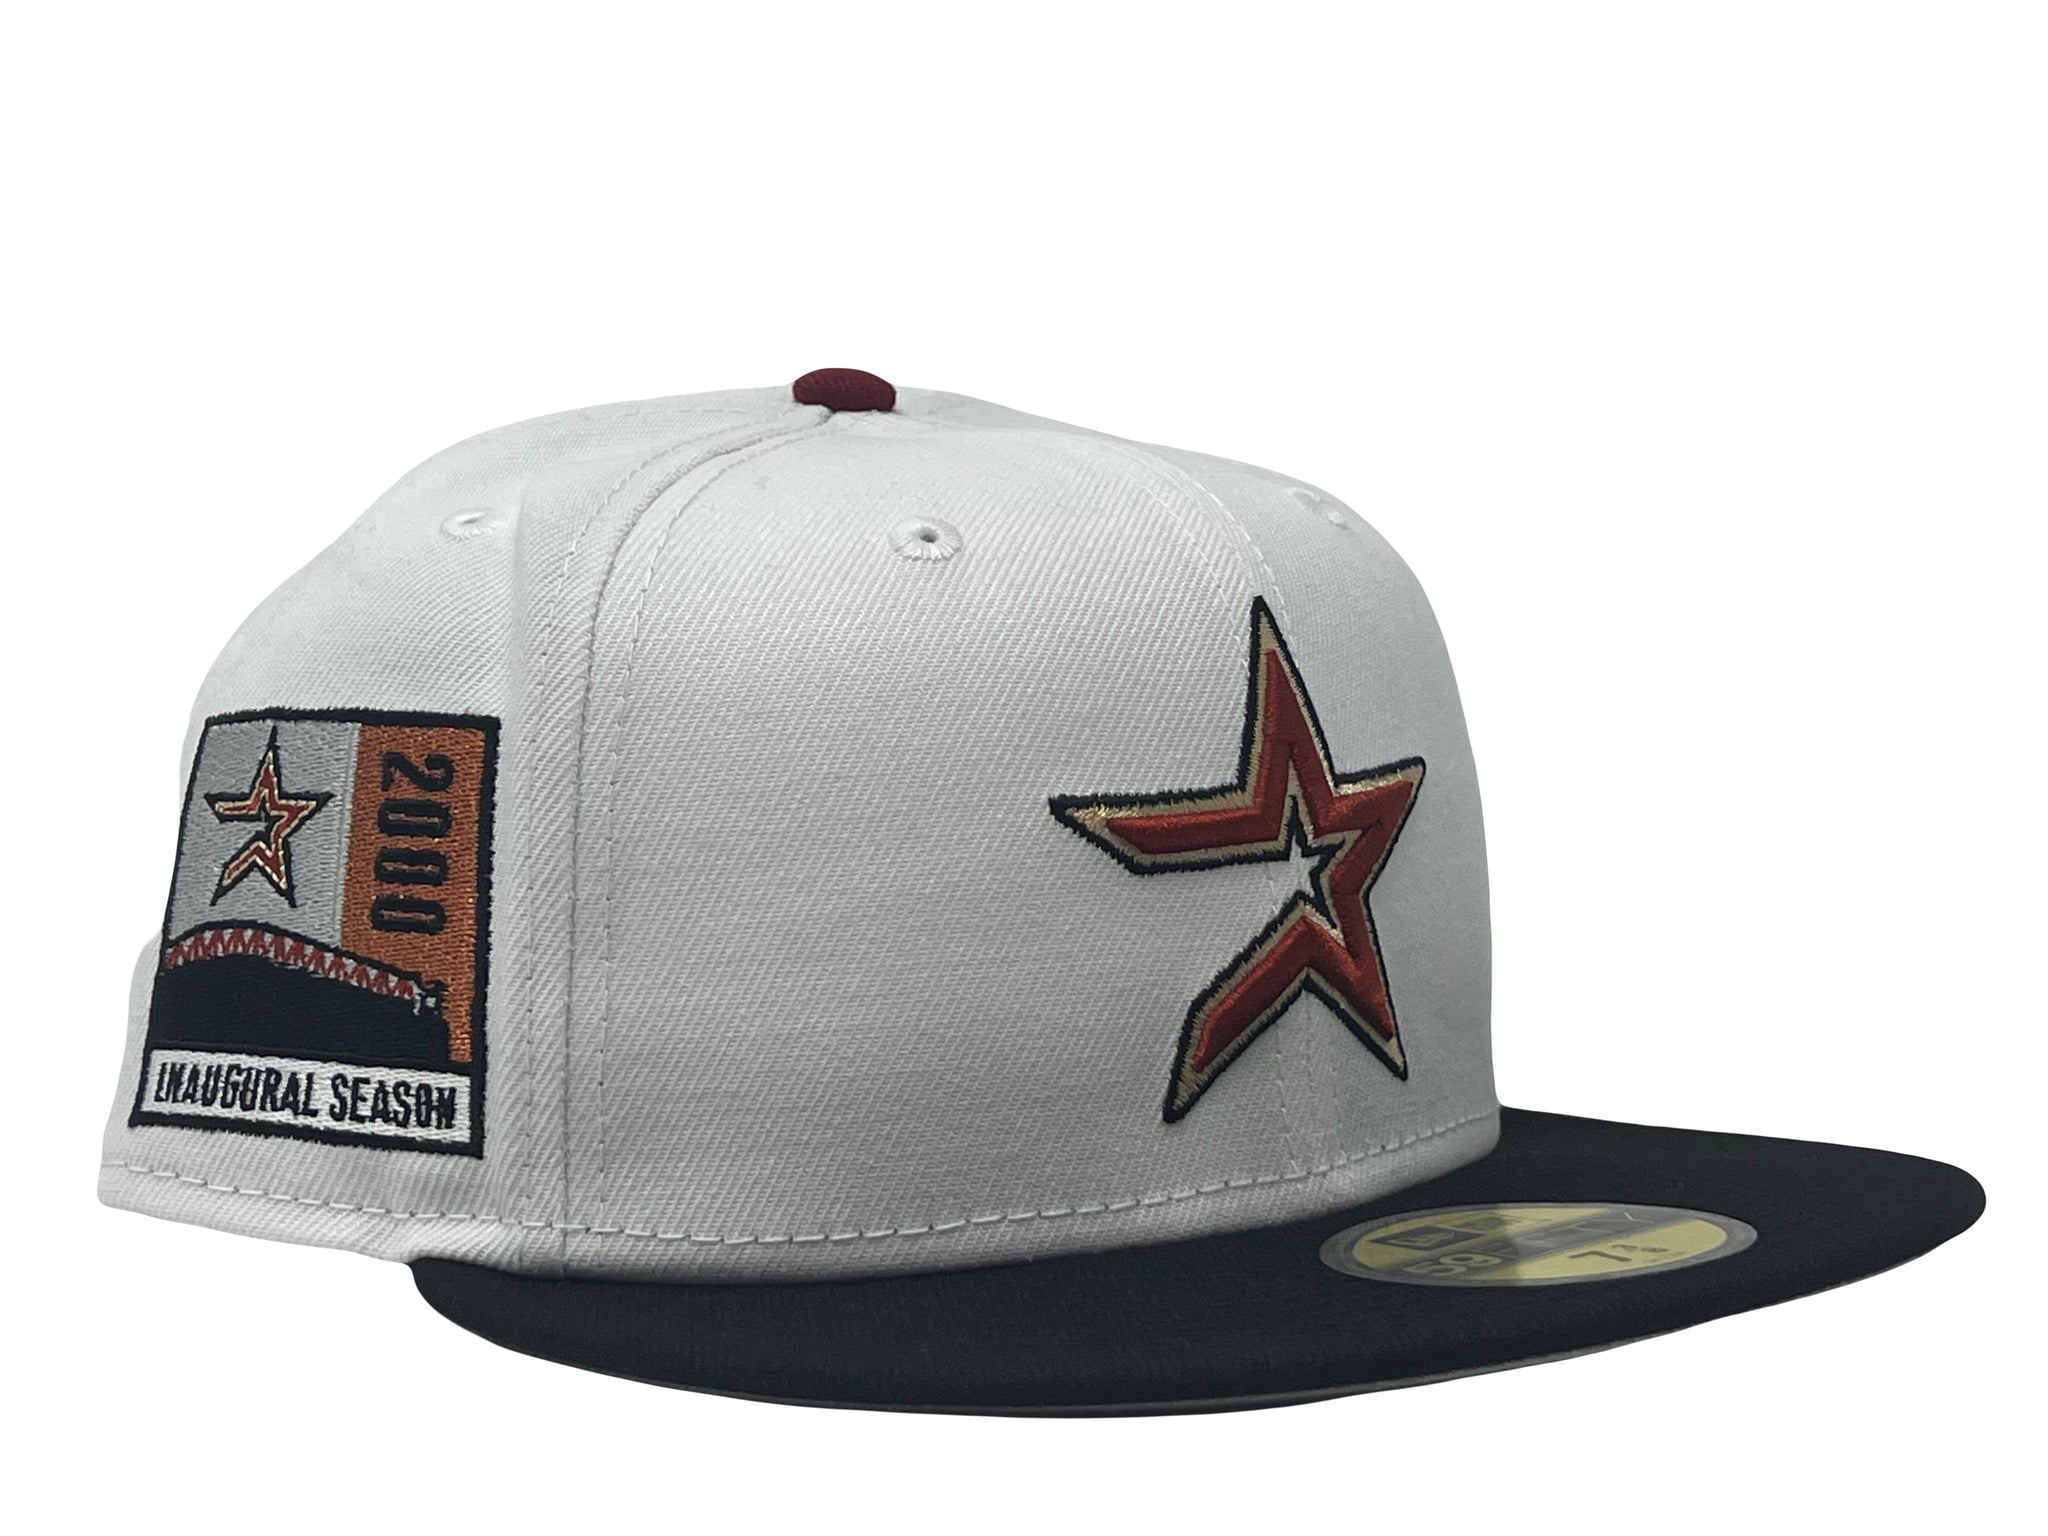 Houston Astros Black Mitchell & Ness Team Classic Snapback Hat